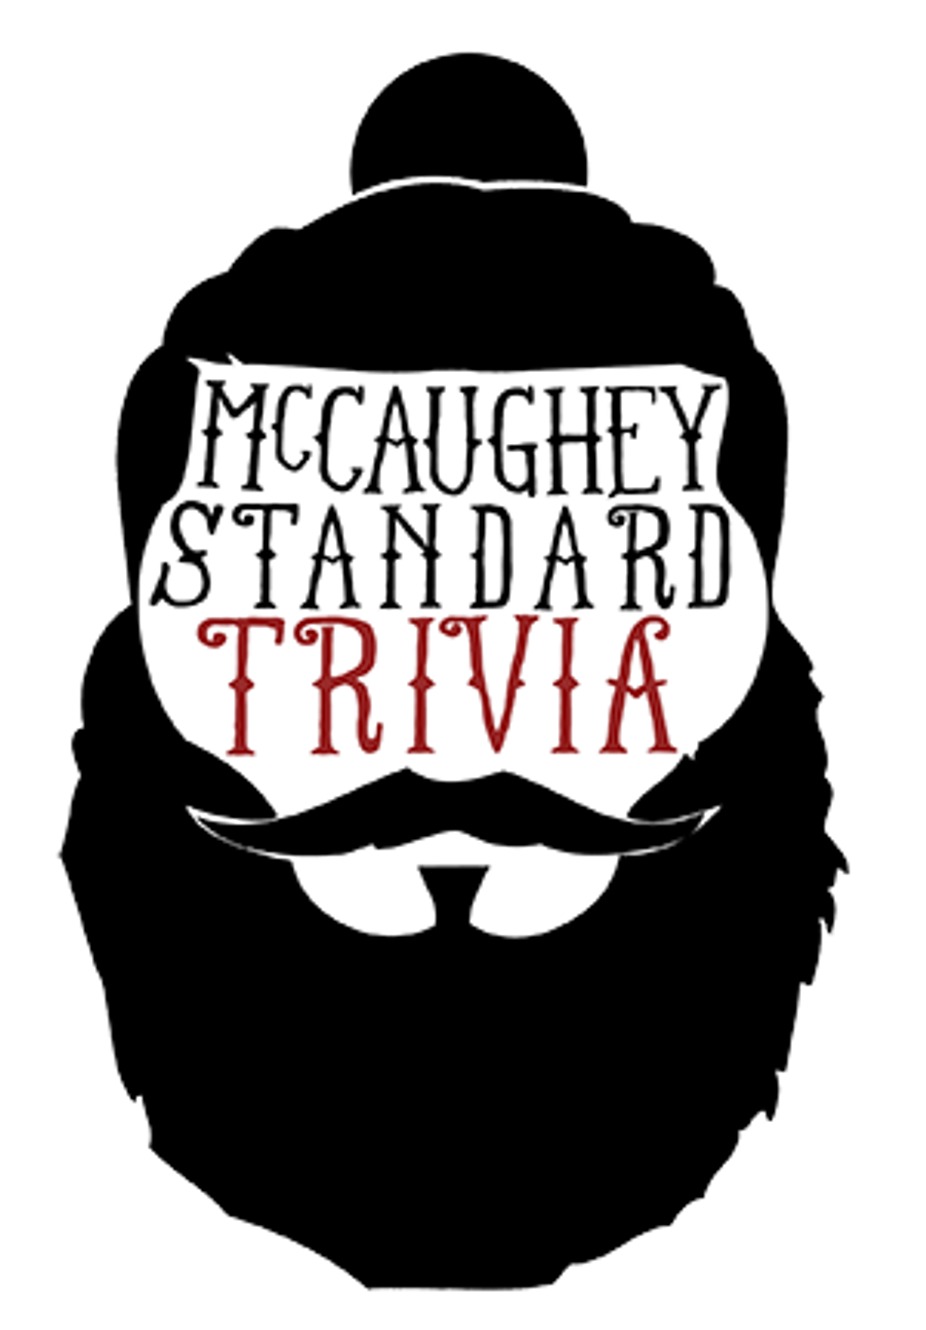 McCaughey Standard Trivia event photo